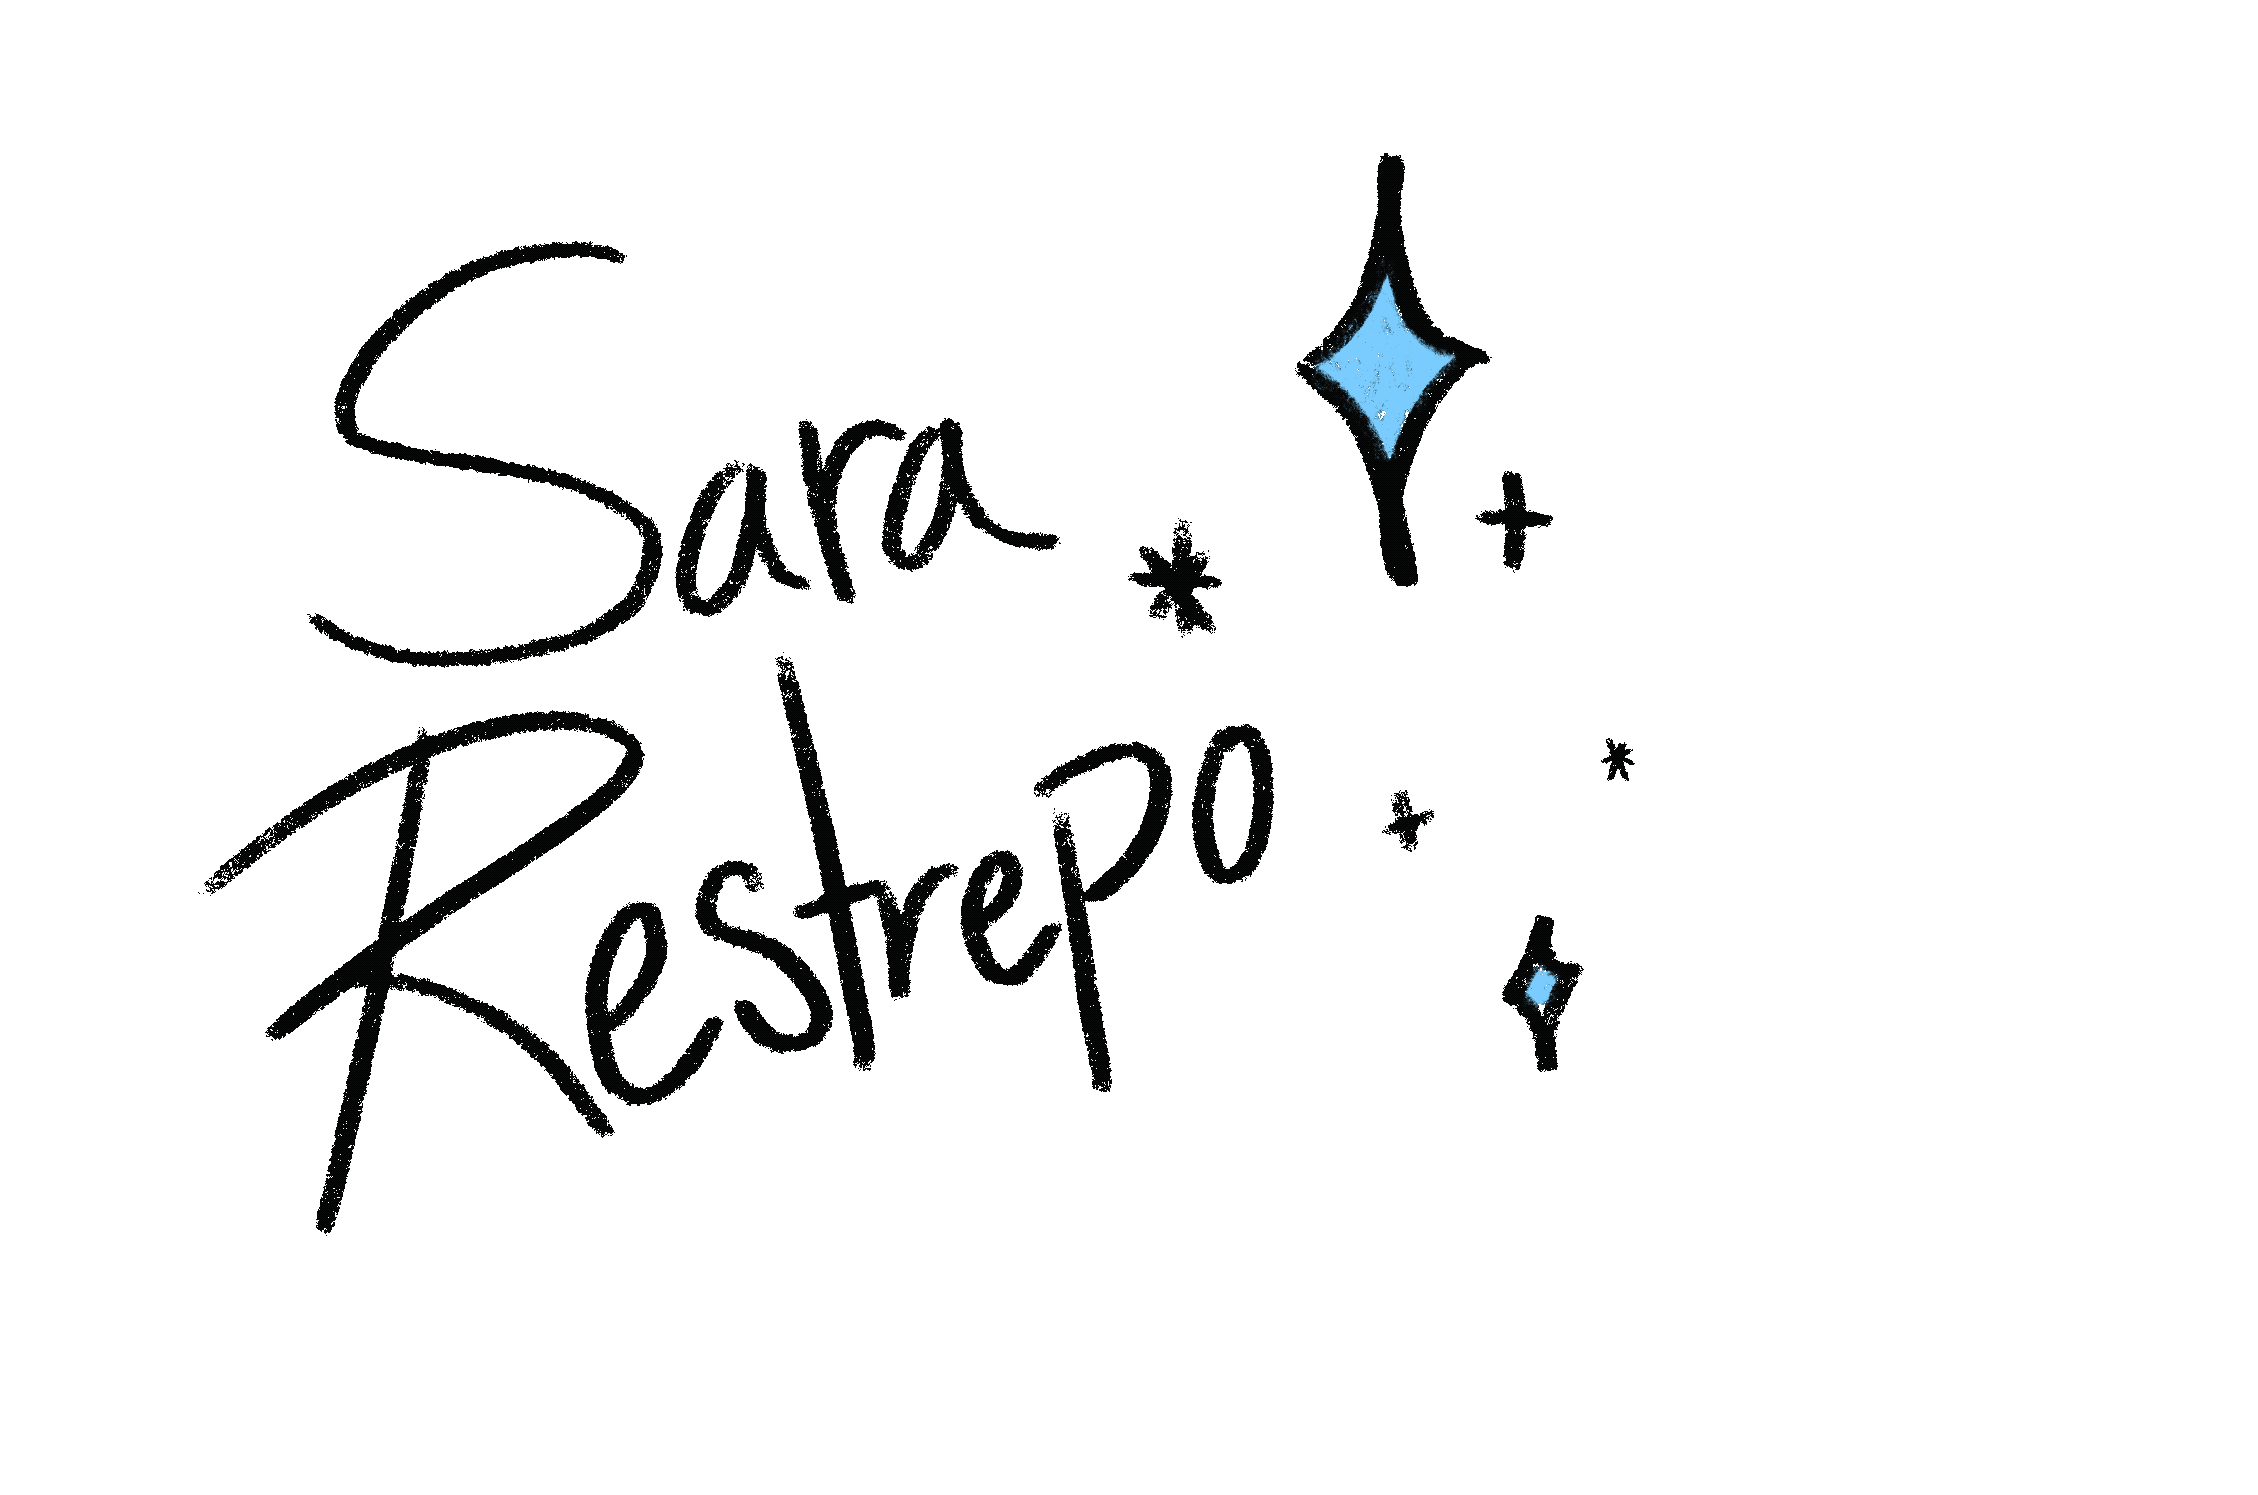 Sara Restrepo